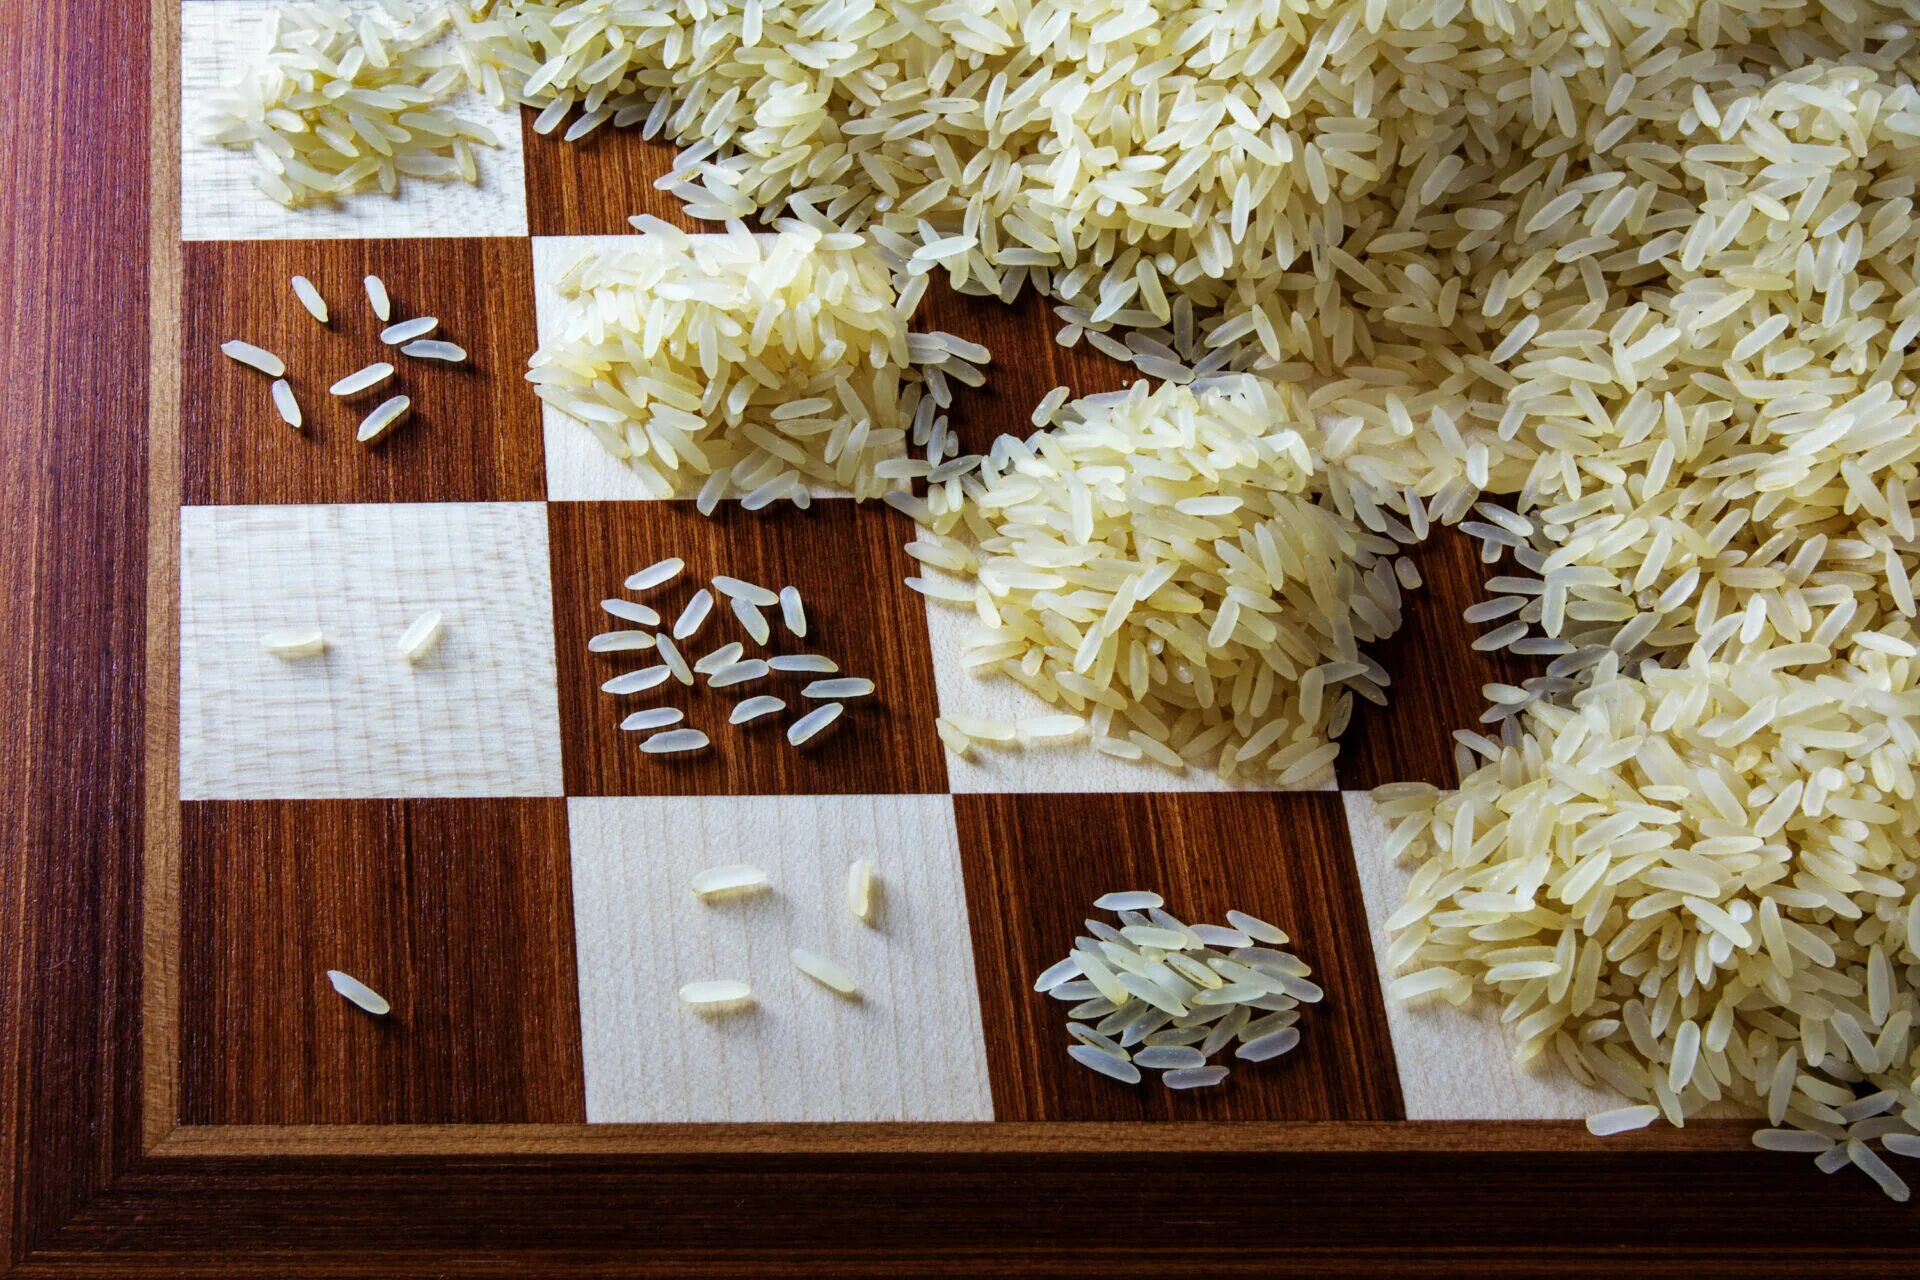 Шахматы и рисовые зерна. Зерна риса на шахматной доске. Притча о шахматной доске и зернах. Рис и шахматная доска.